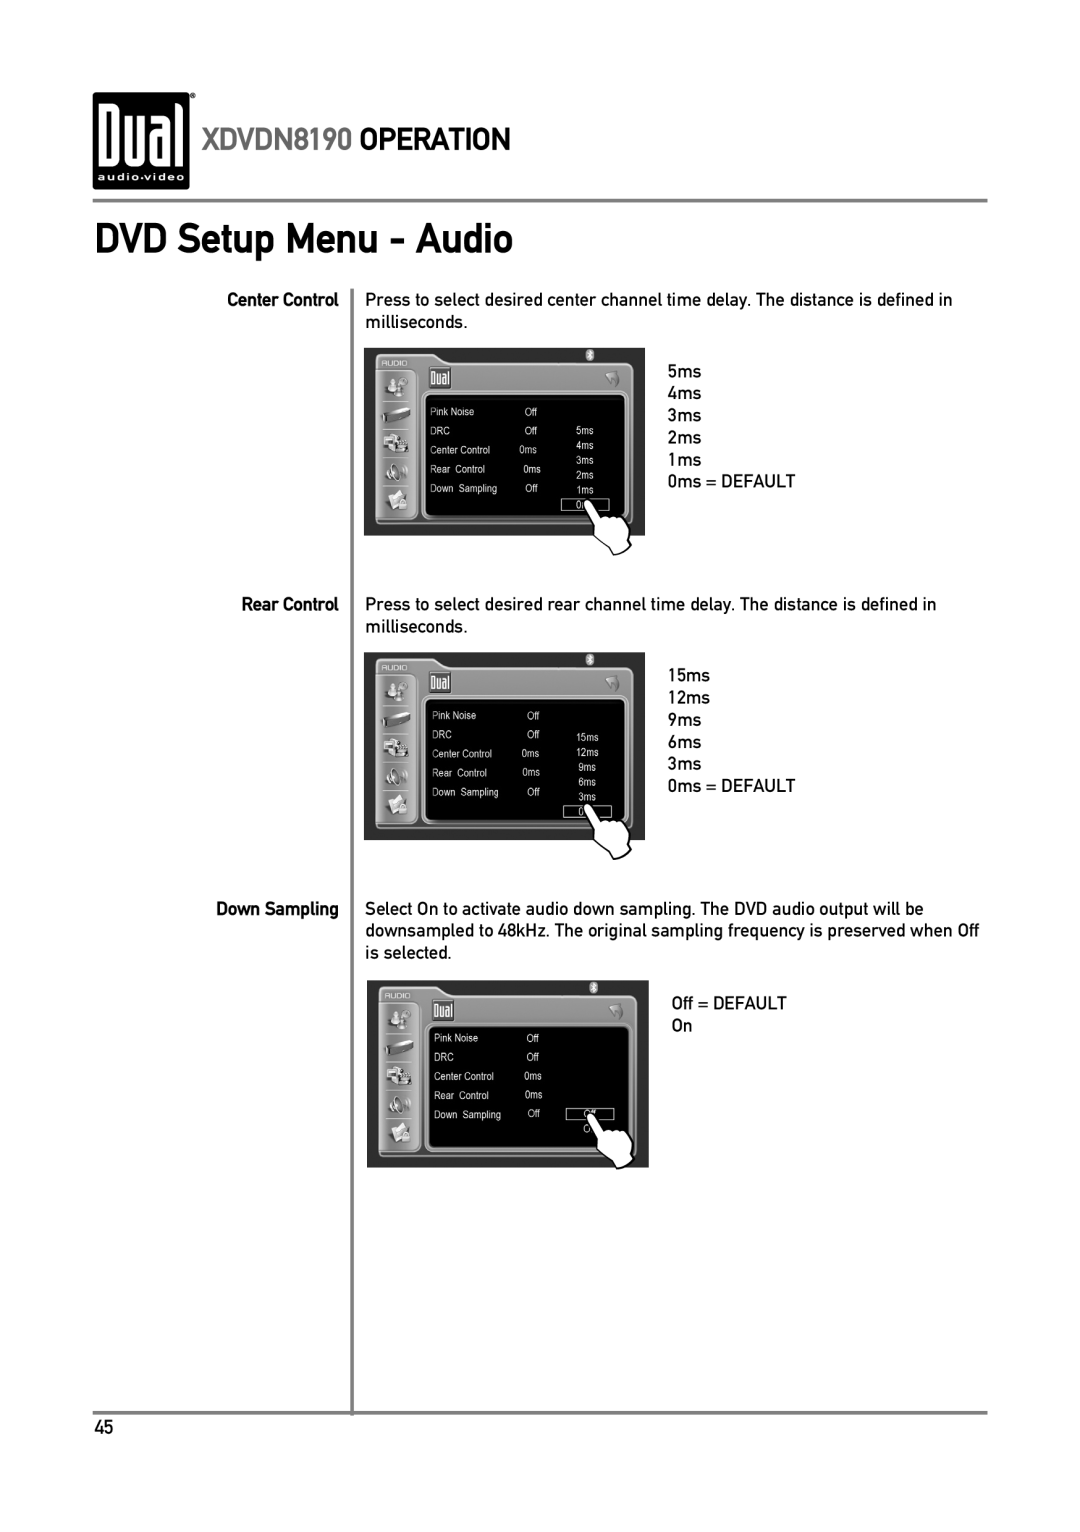 Dual owner manual DVD Setup Menu - Audio, XDVDN8190 OPERATION, Center Control Rear Control Down Sampling 